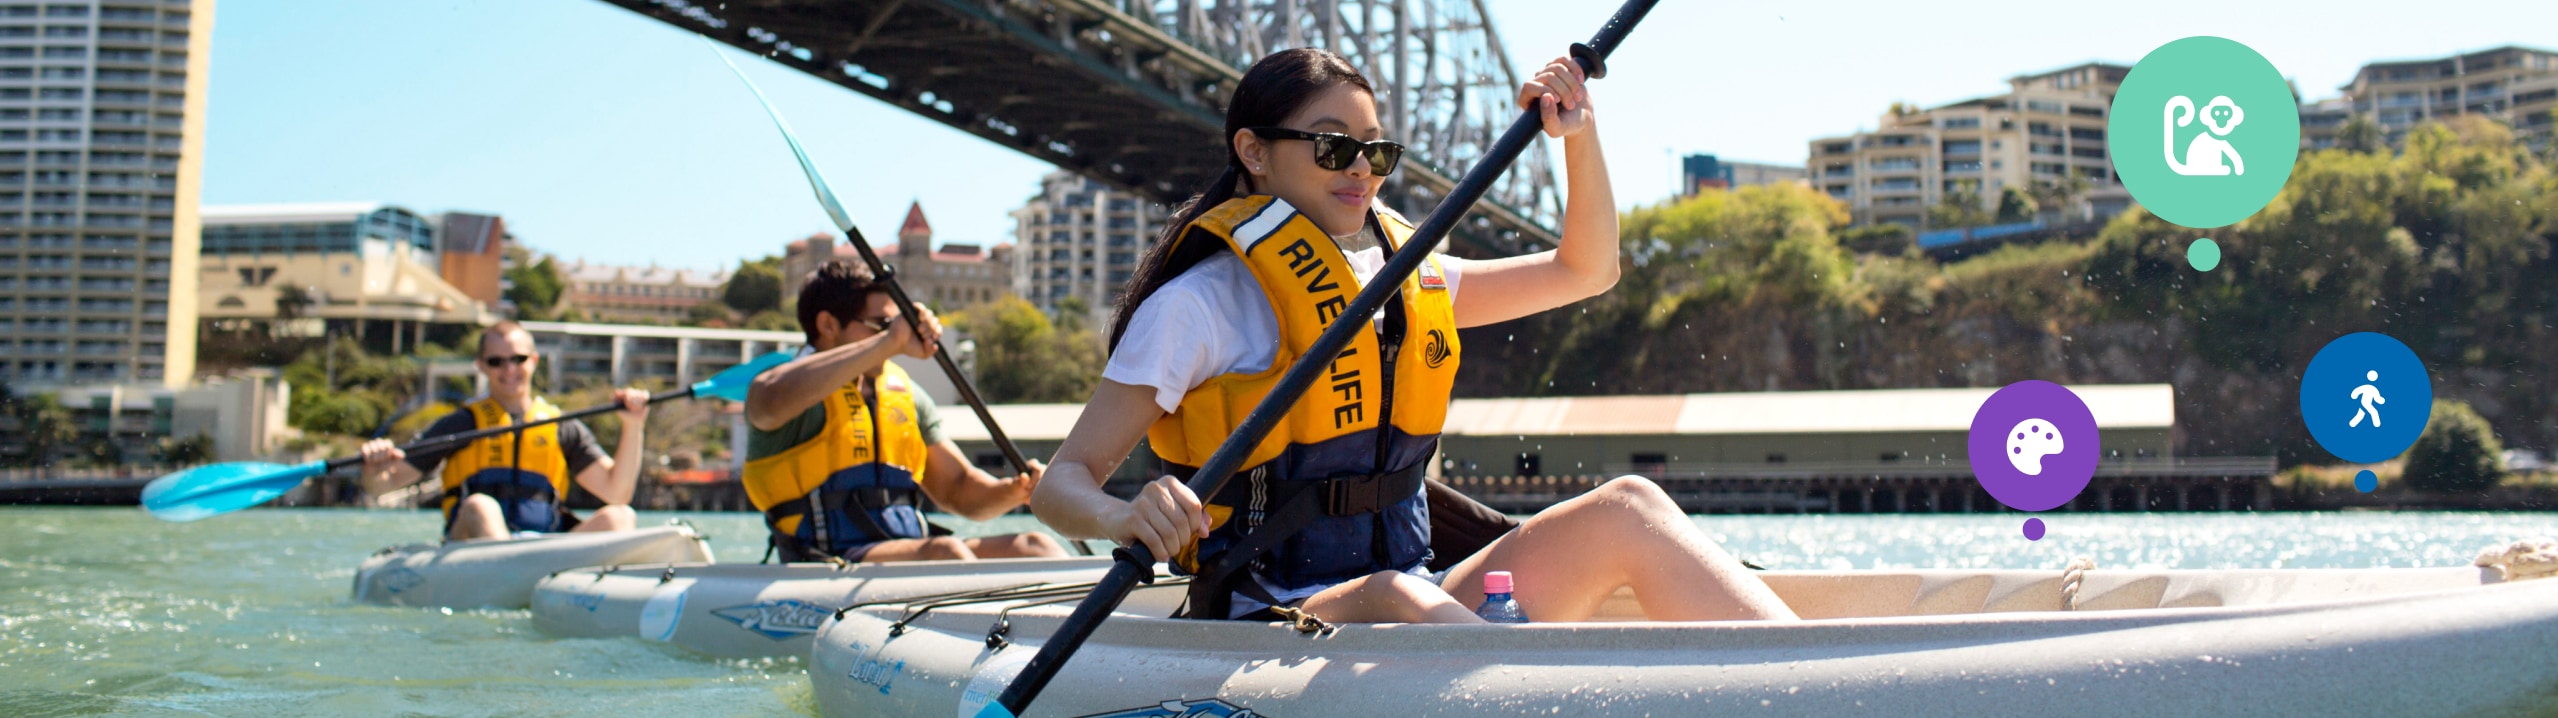 Banner image showing people kayaking on the Brisbane River.